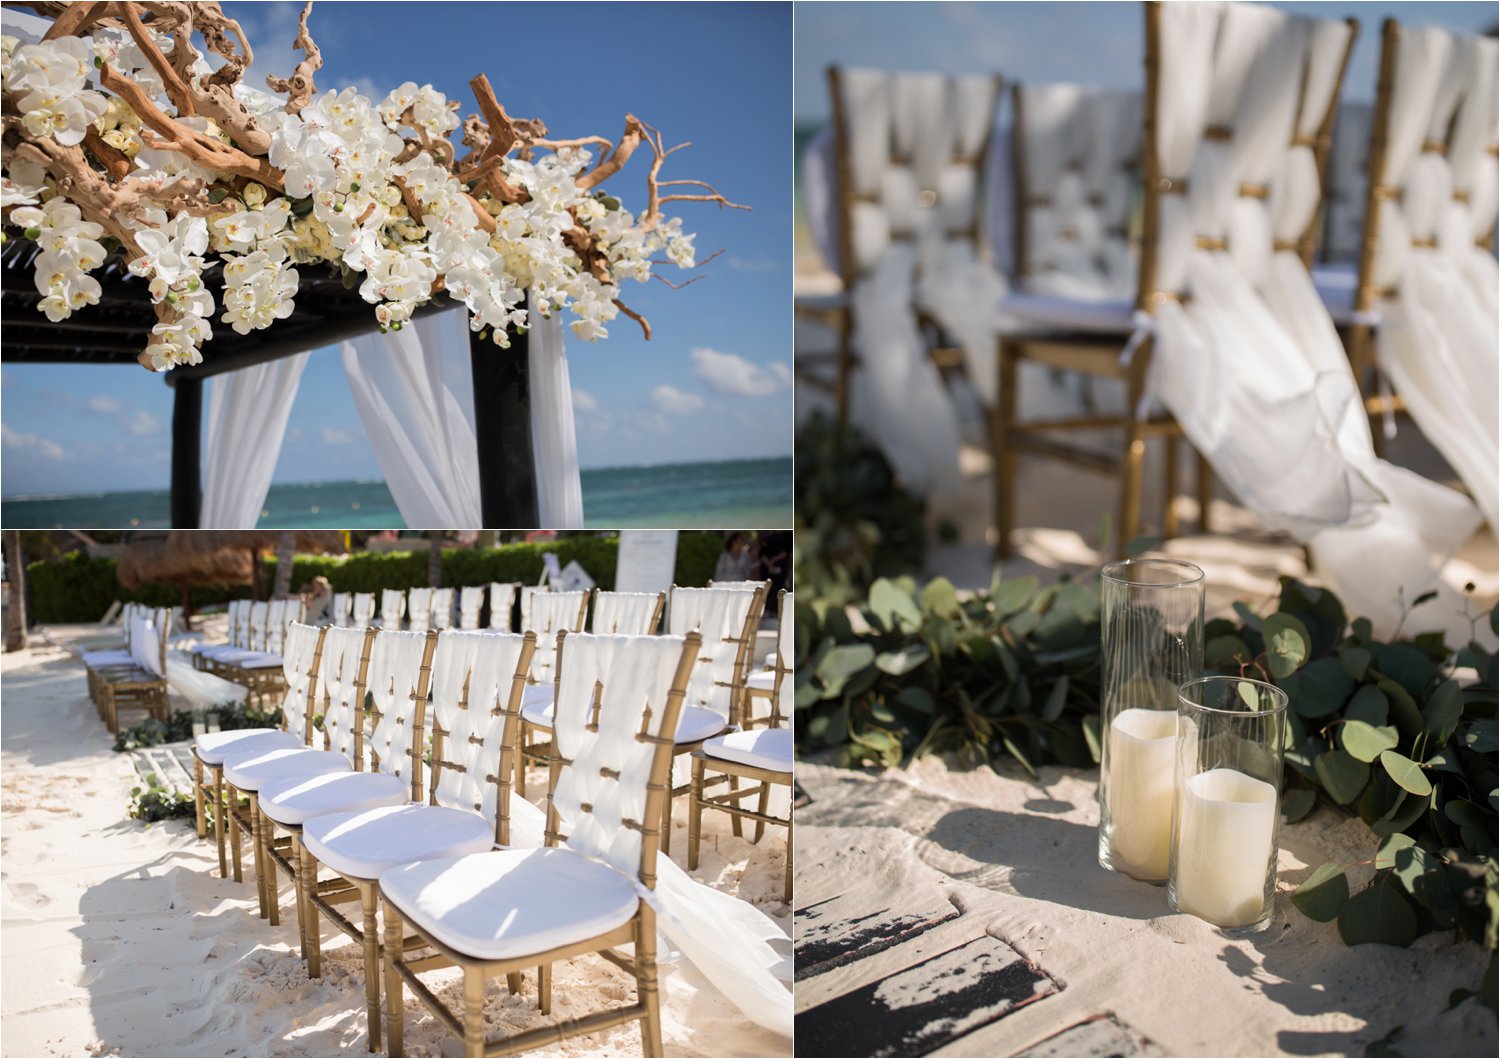  images by feliciathephotographer.com | destination wedding photographer | mexico | tropical | fiji | venue | azul beach resort | riviera maya | ceremony | white linen chairs | Beachwood aisle | candles | sand | eucalyptus | floral overhead | 